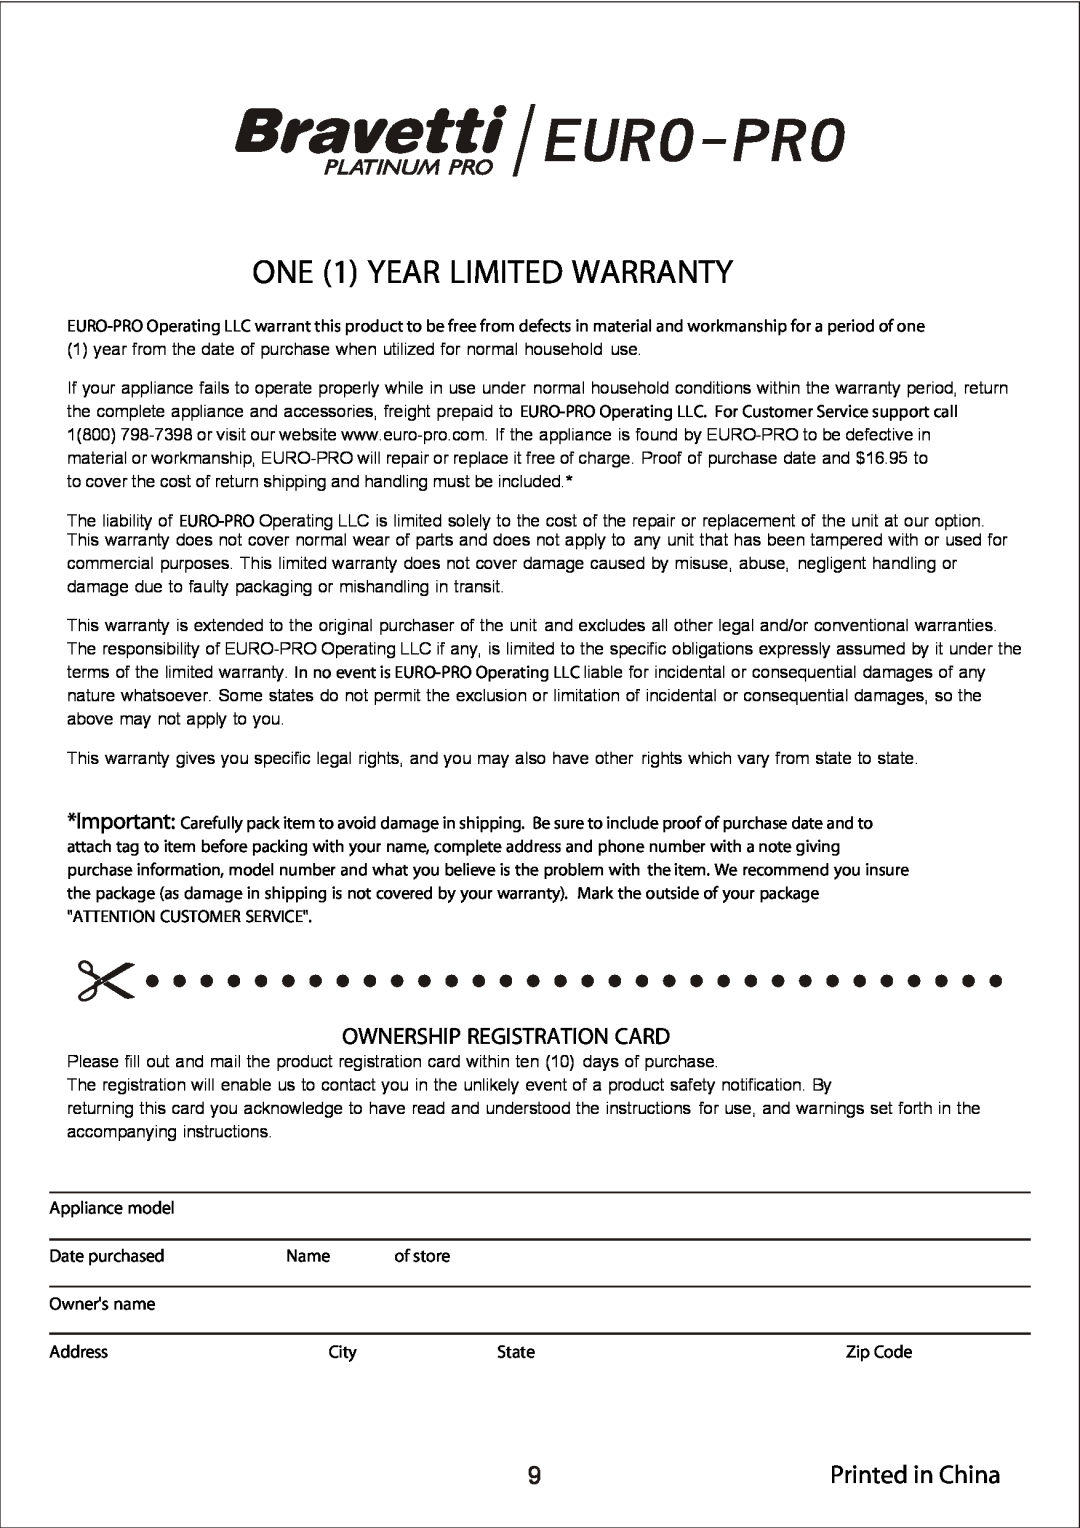 Bravetti BKS600 manual ONE 1 YEAR LIMITED WARRANTY, Ownership Registration Card 